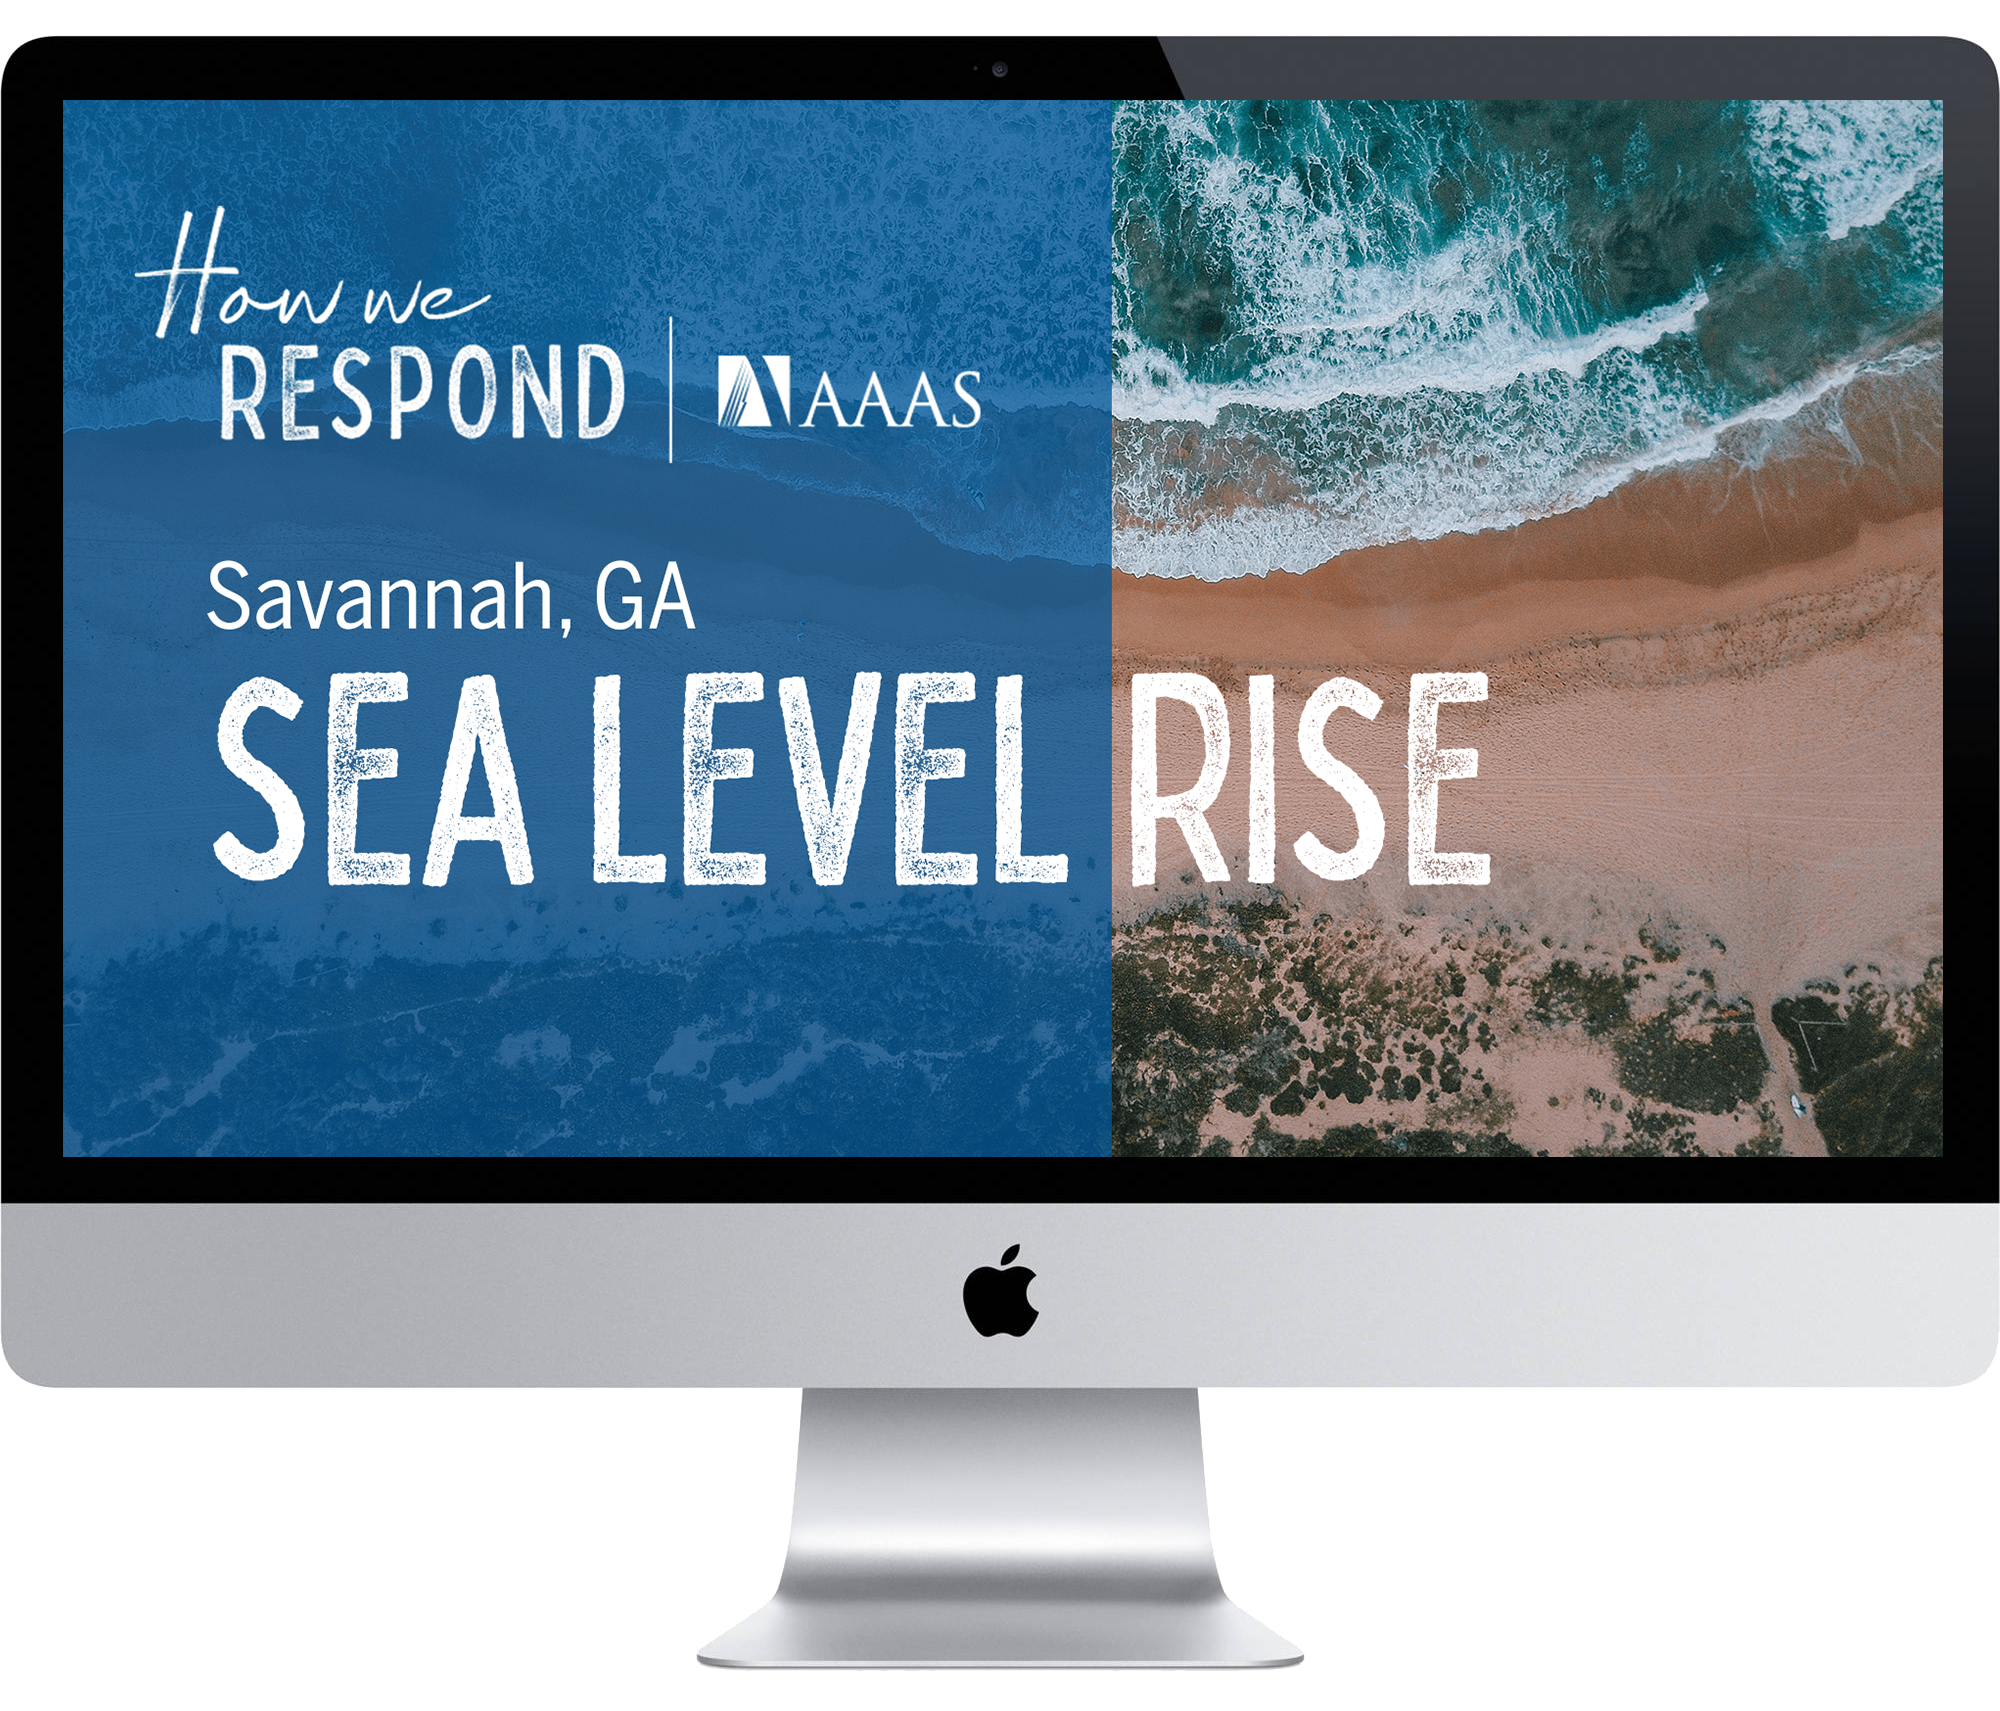 Savannah, GA - Sea level rise